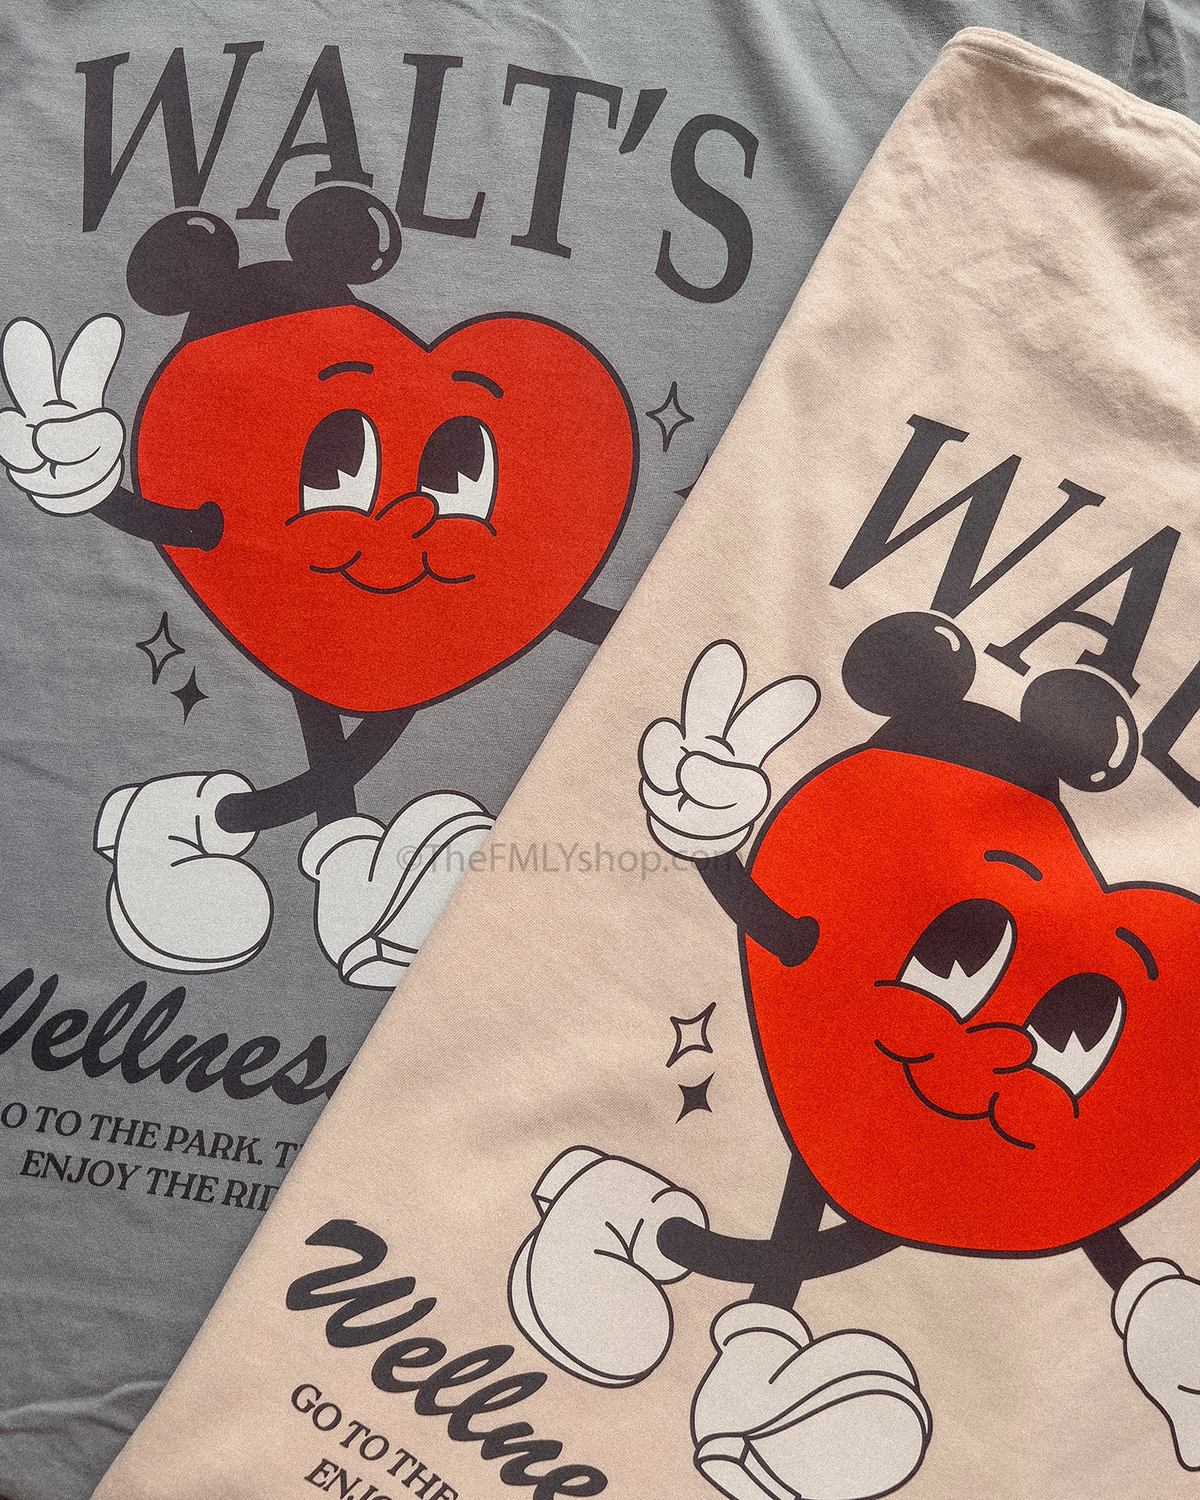 Walt's Wellness Club Heart Mascot Tee